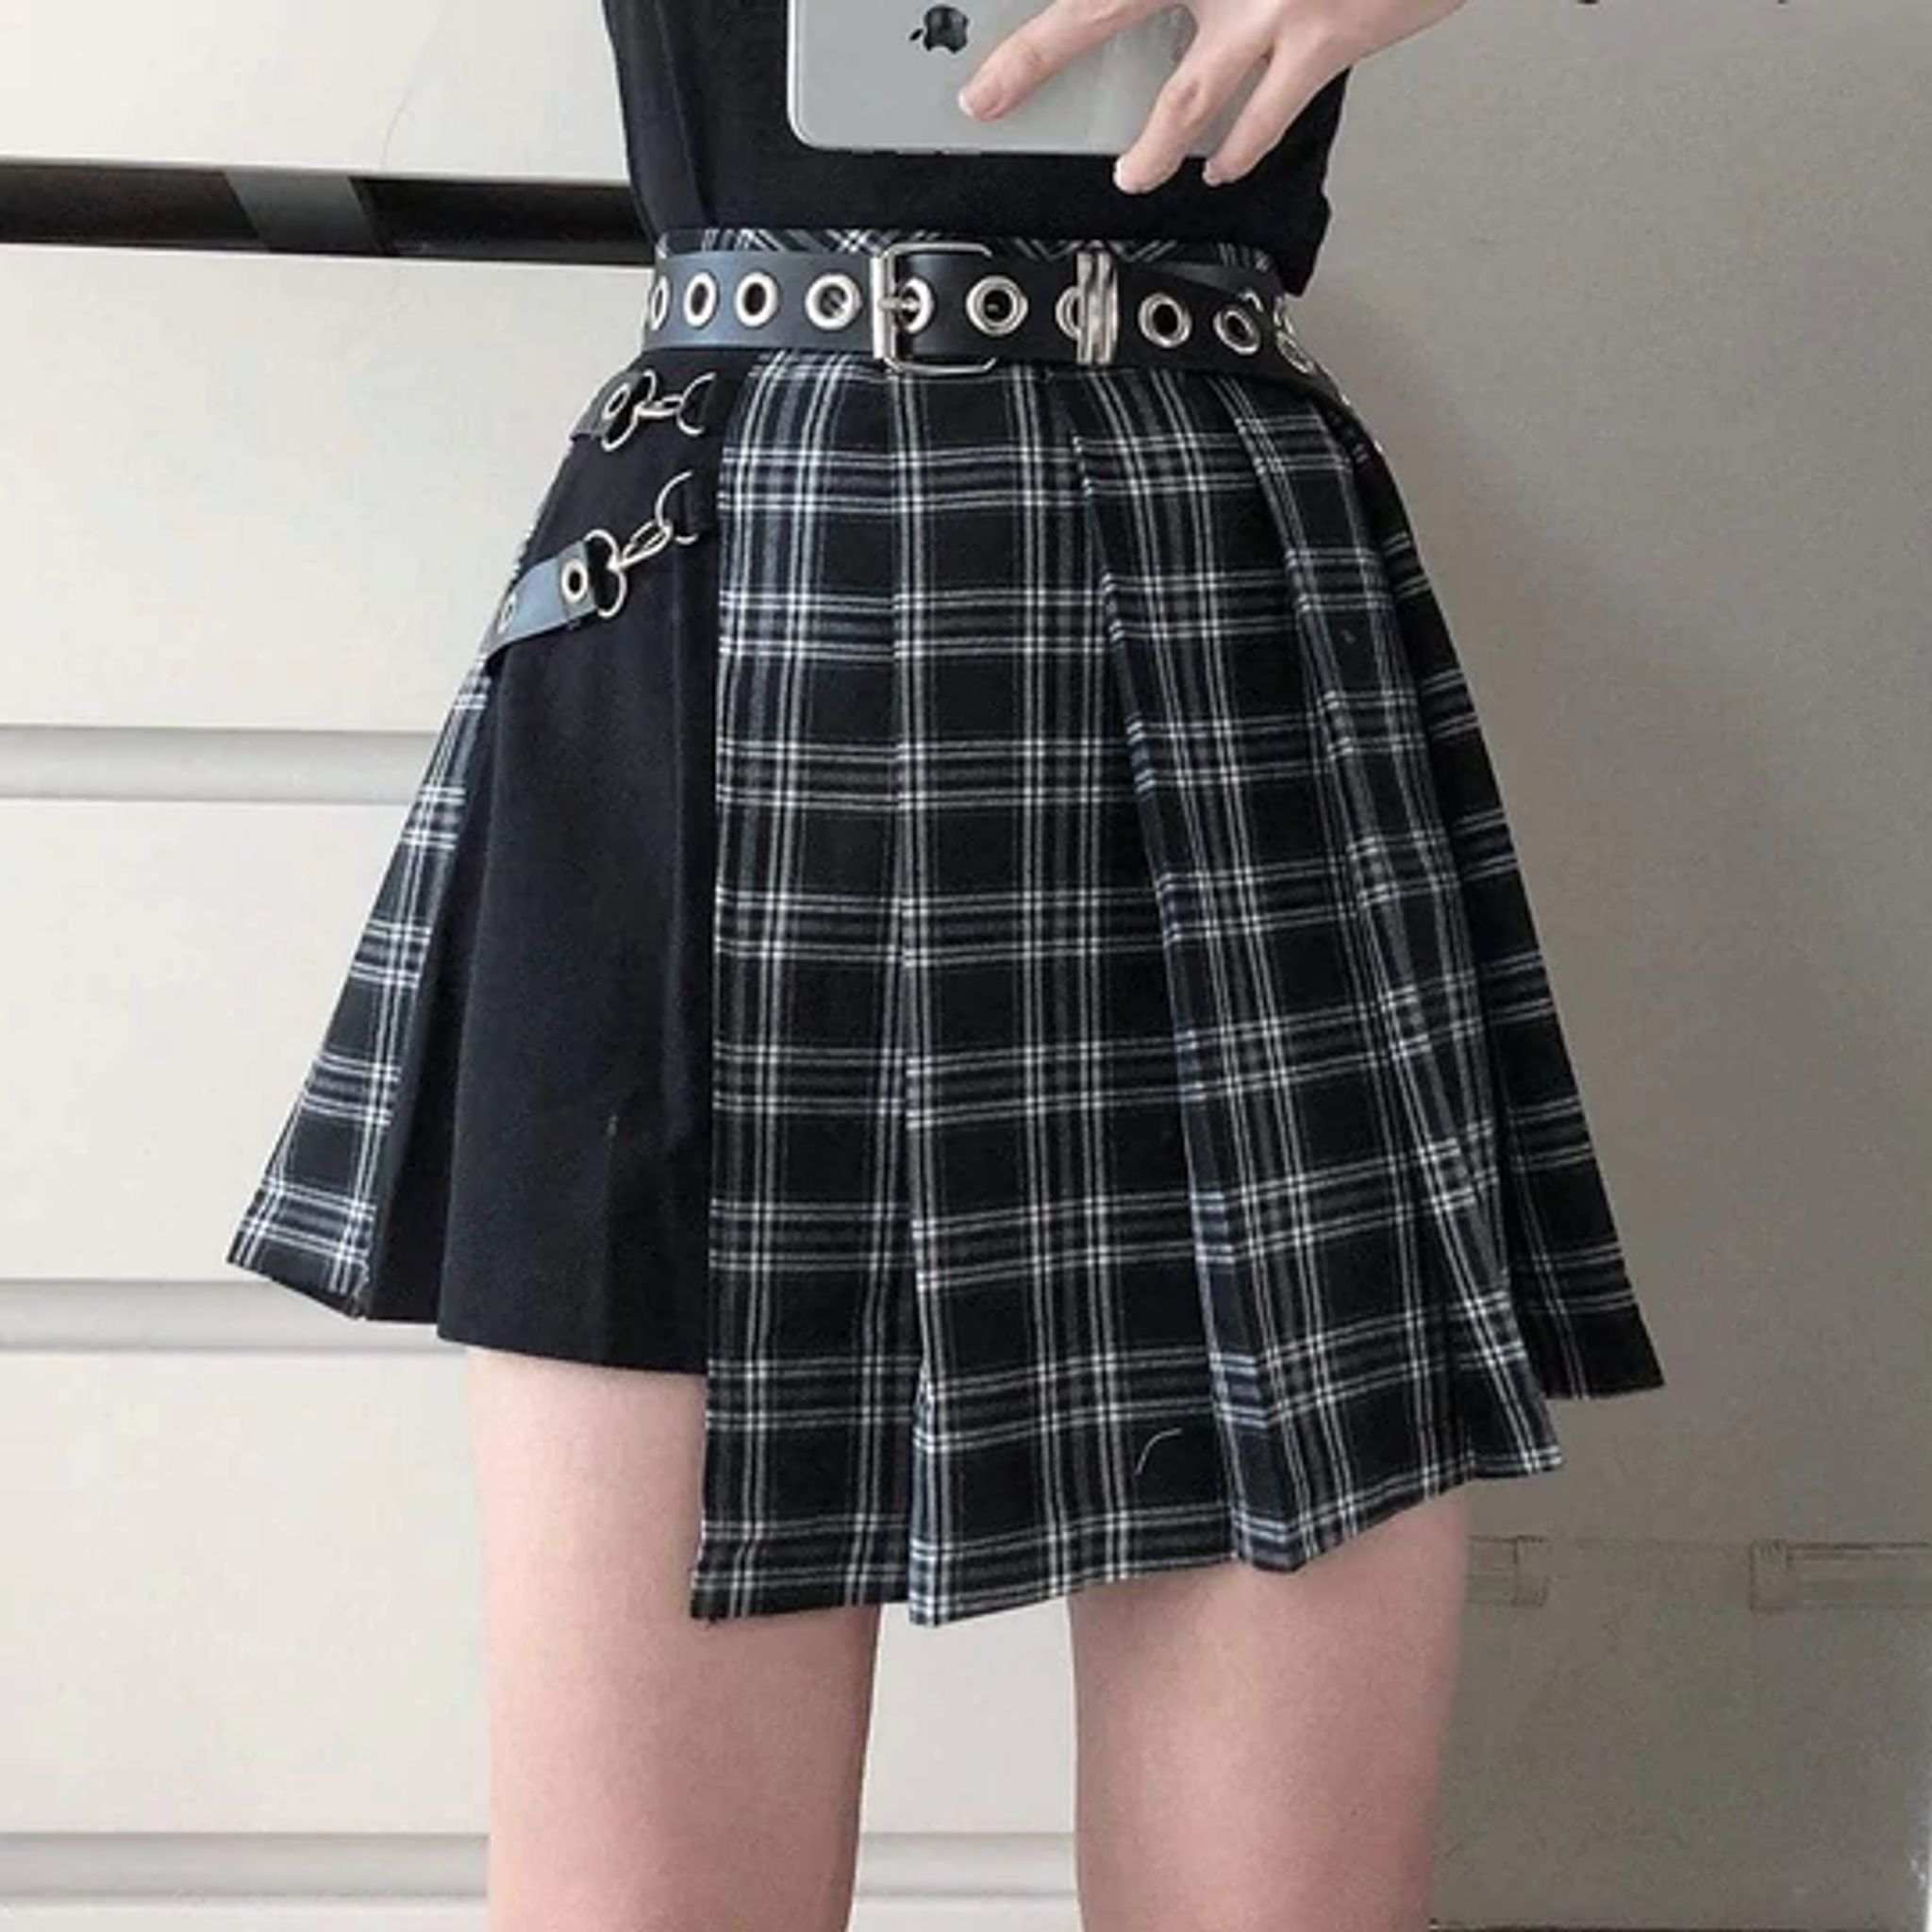 Drezden Goth Tartan Pleated Punk Skirt